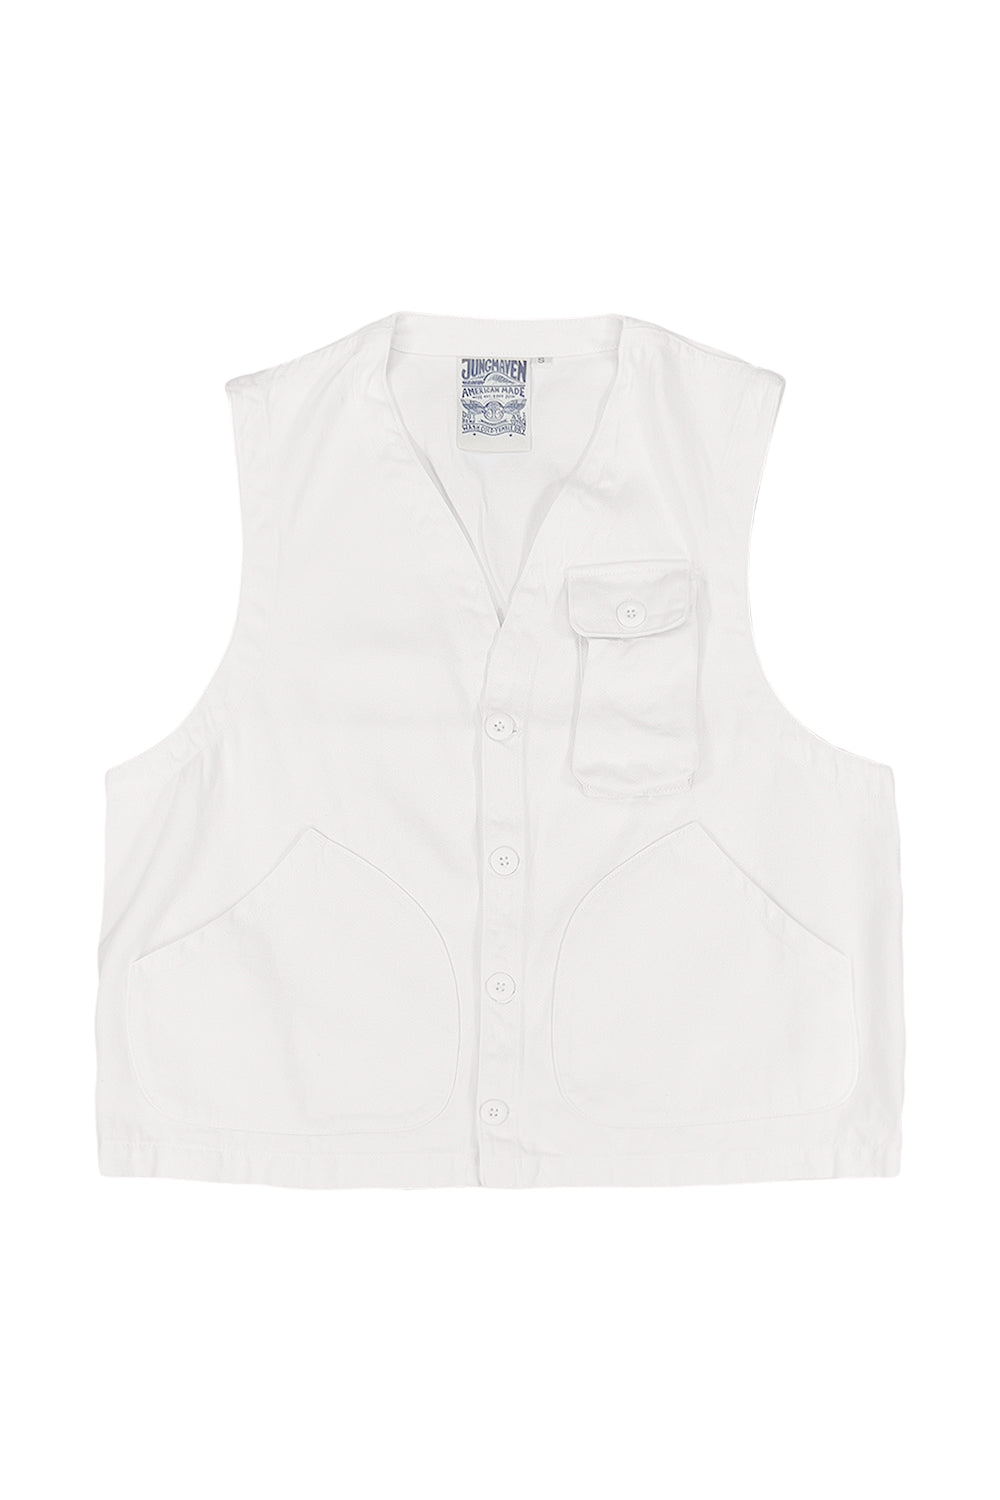 Falcon Vest | Jungmaven Hemp Clothing & Accessories / Color:Washed White